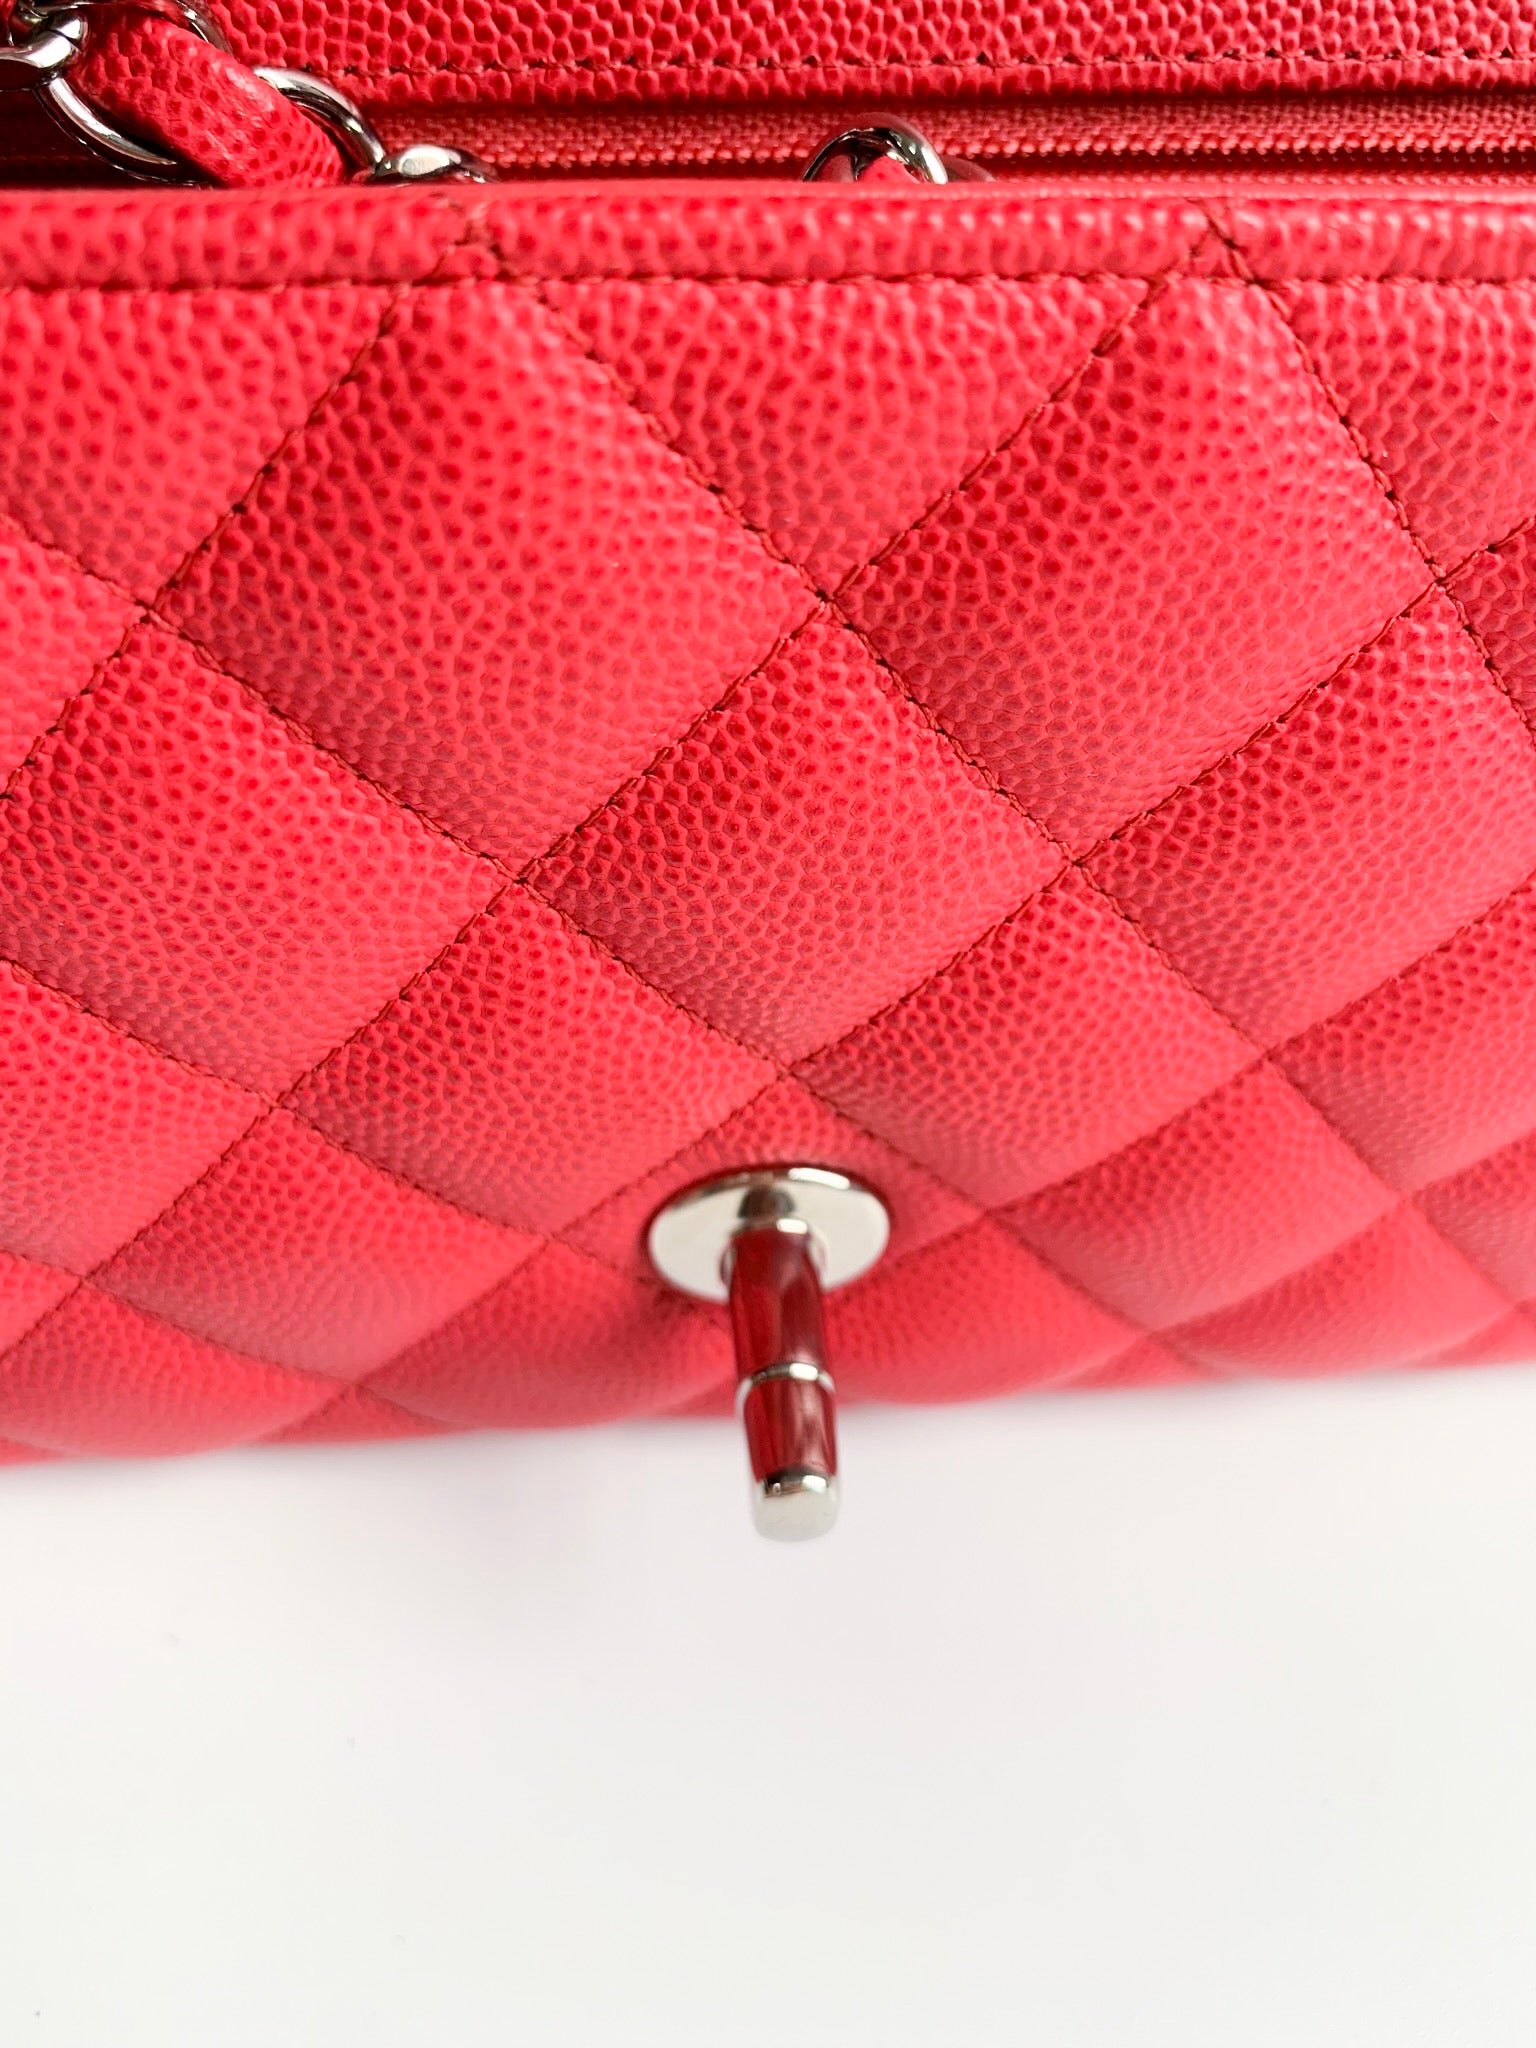 Chanel Mini Rectangular - Red